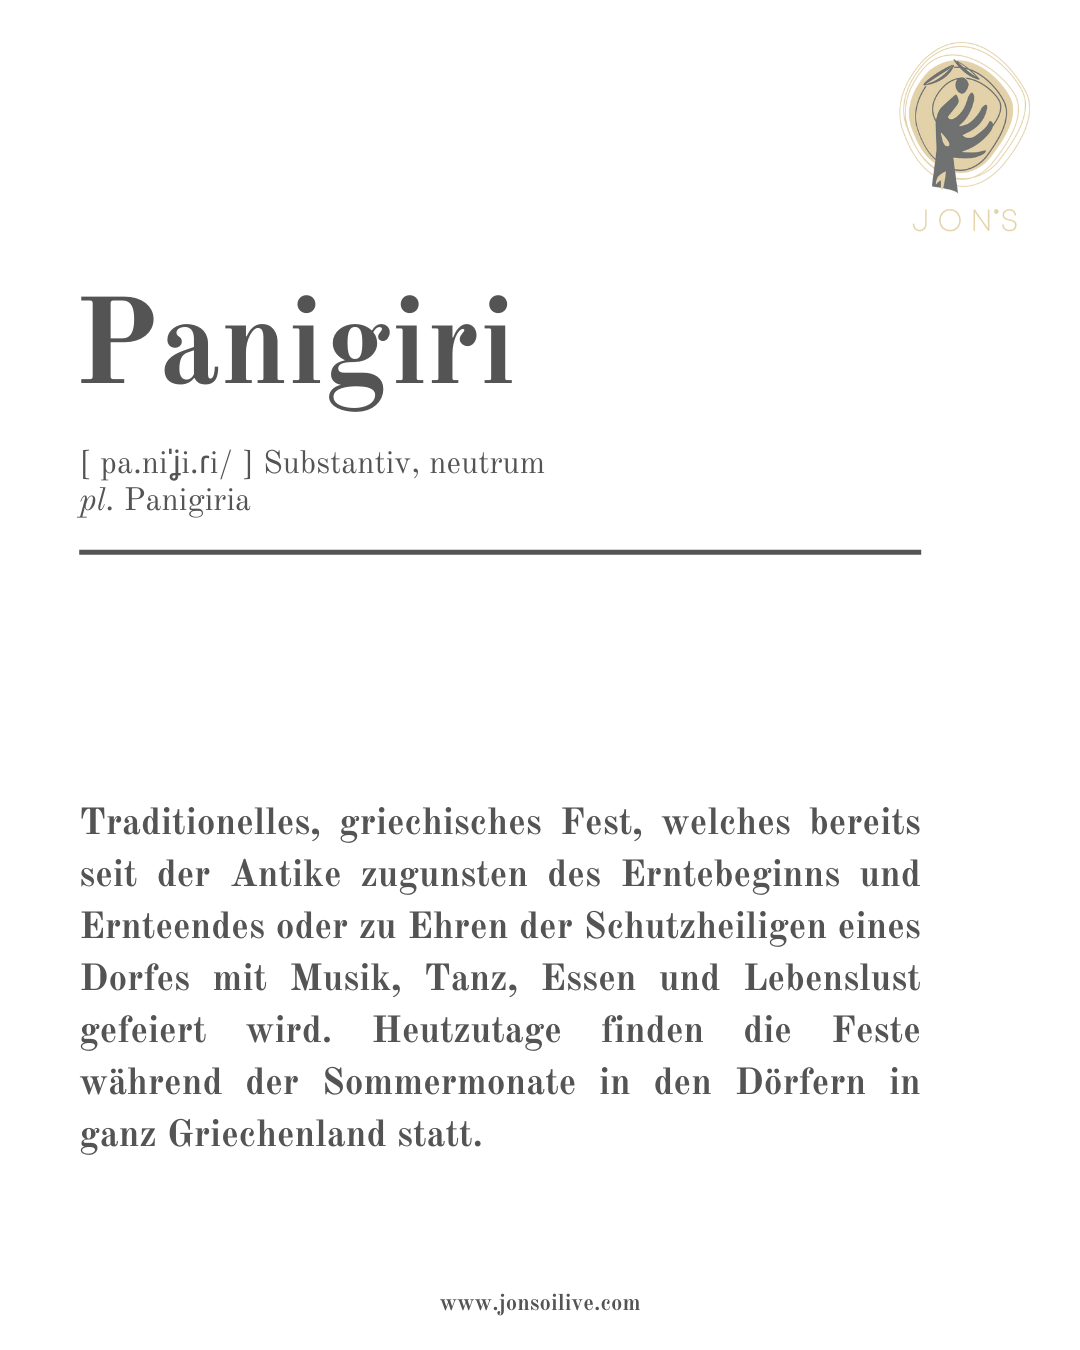 Panigiri-Word-Meaning-Card-Definition